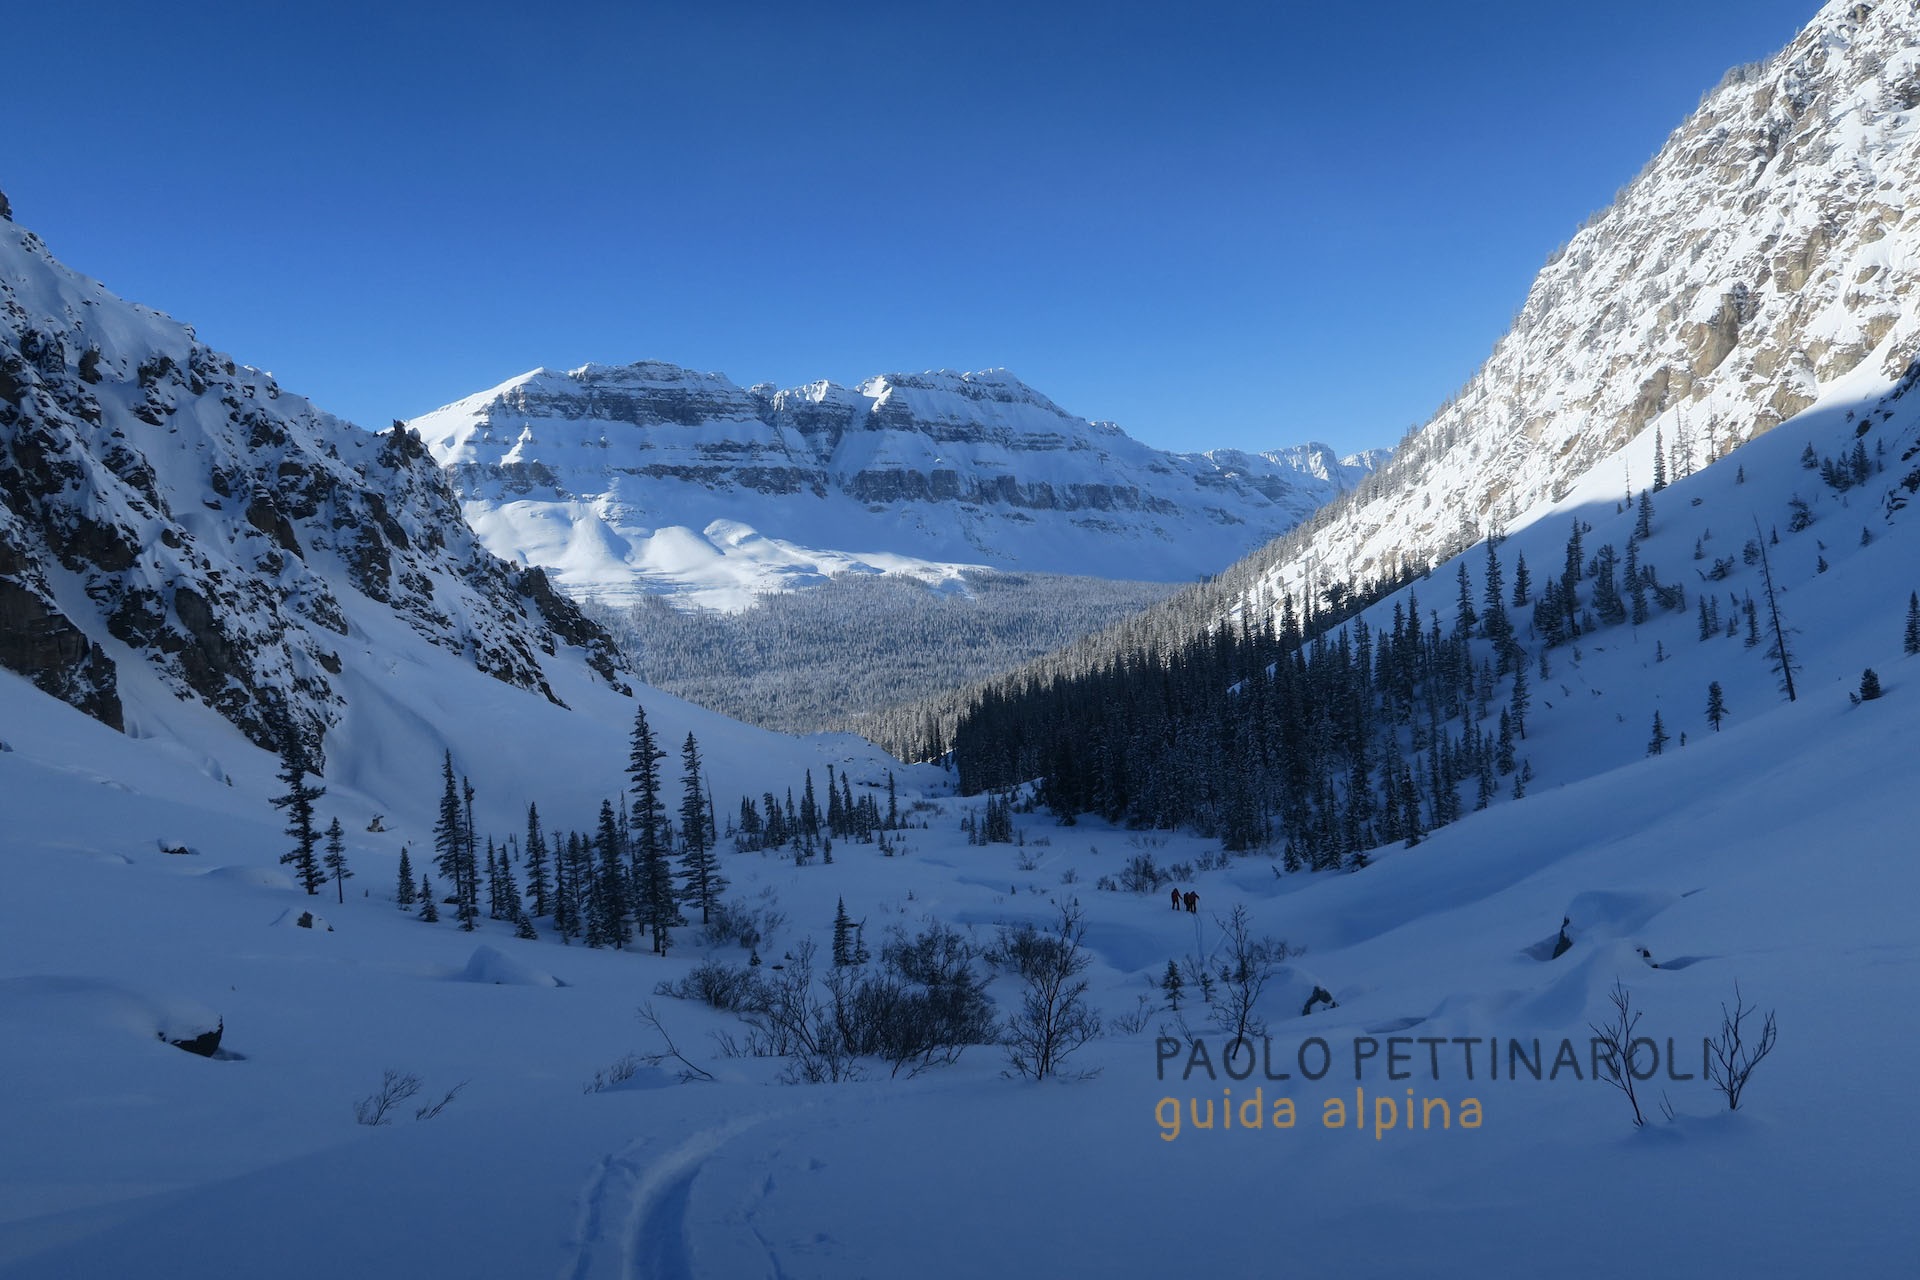 IMG_2168-panorami_paolo pettinaroli guida alpina